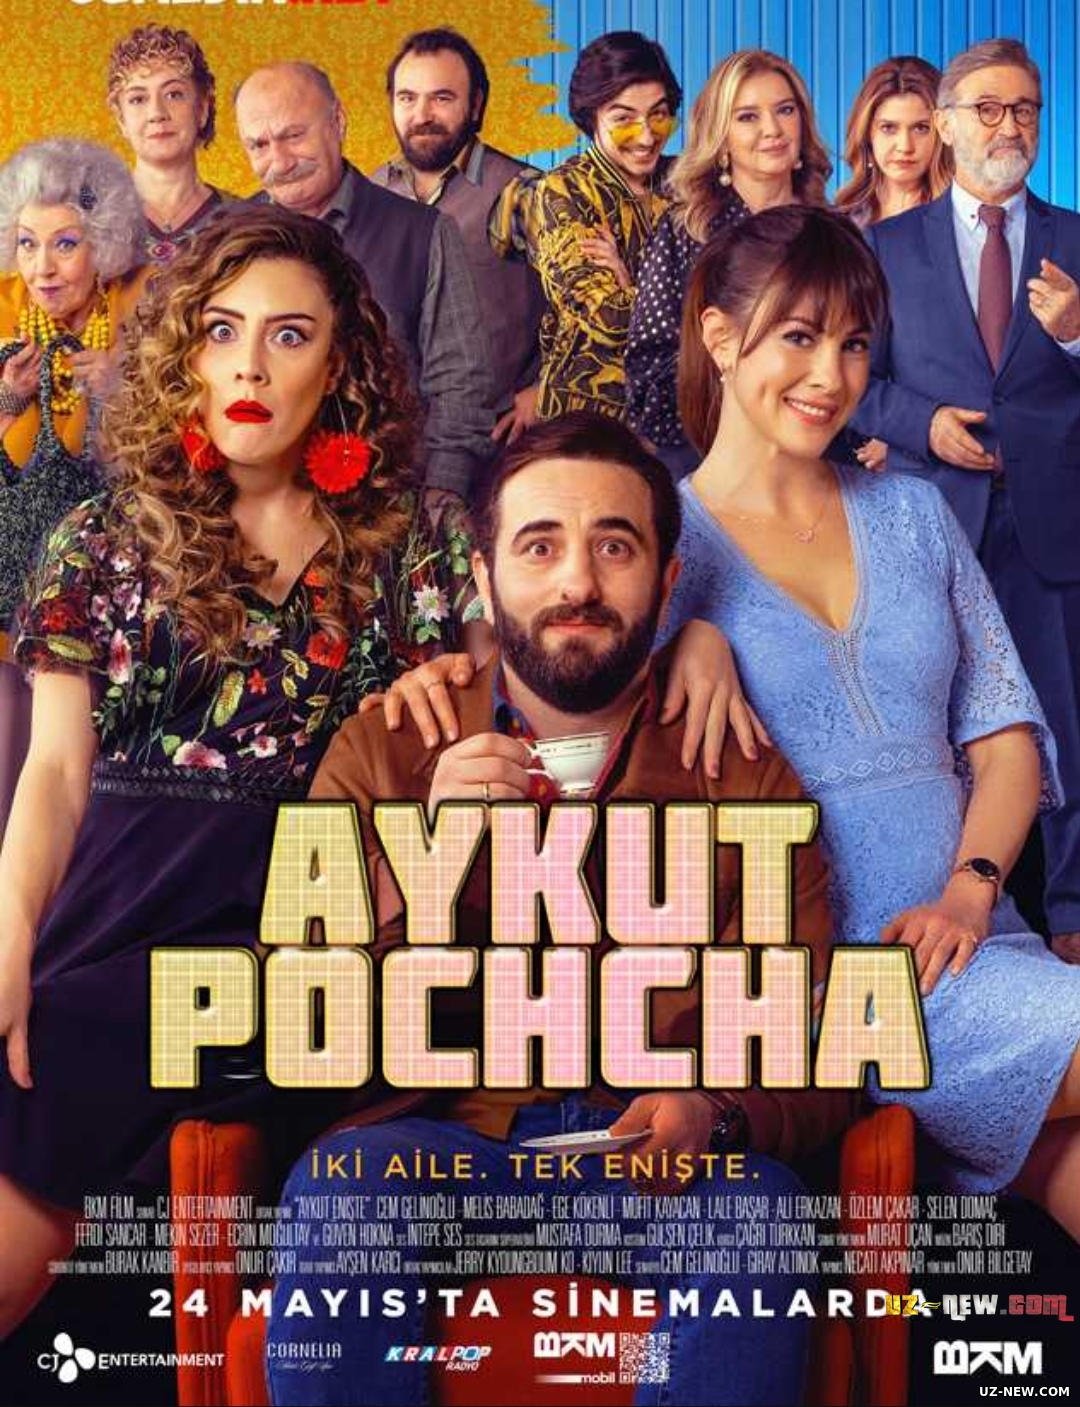 Aykut pochcha / Aykut amaki (Turk tilida)